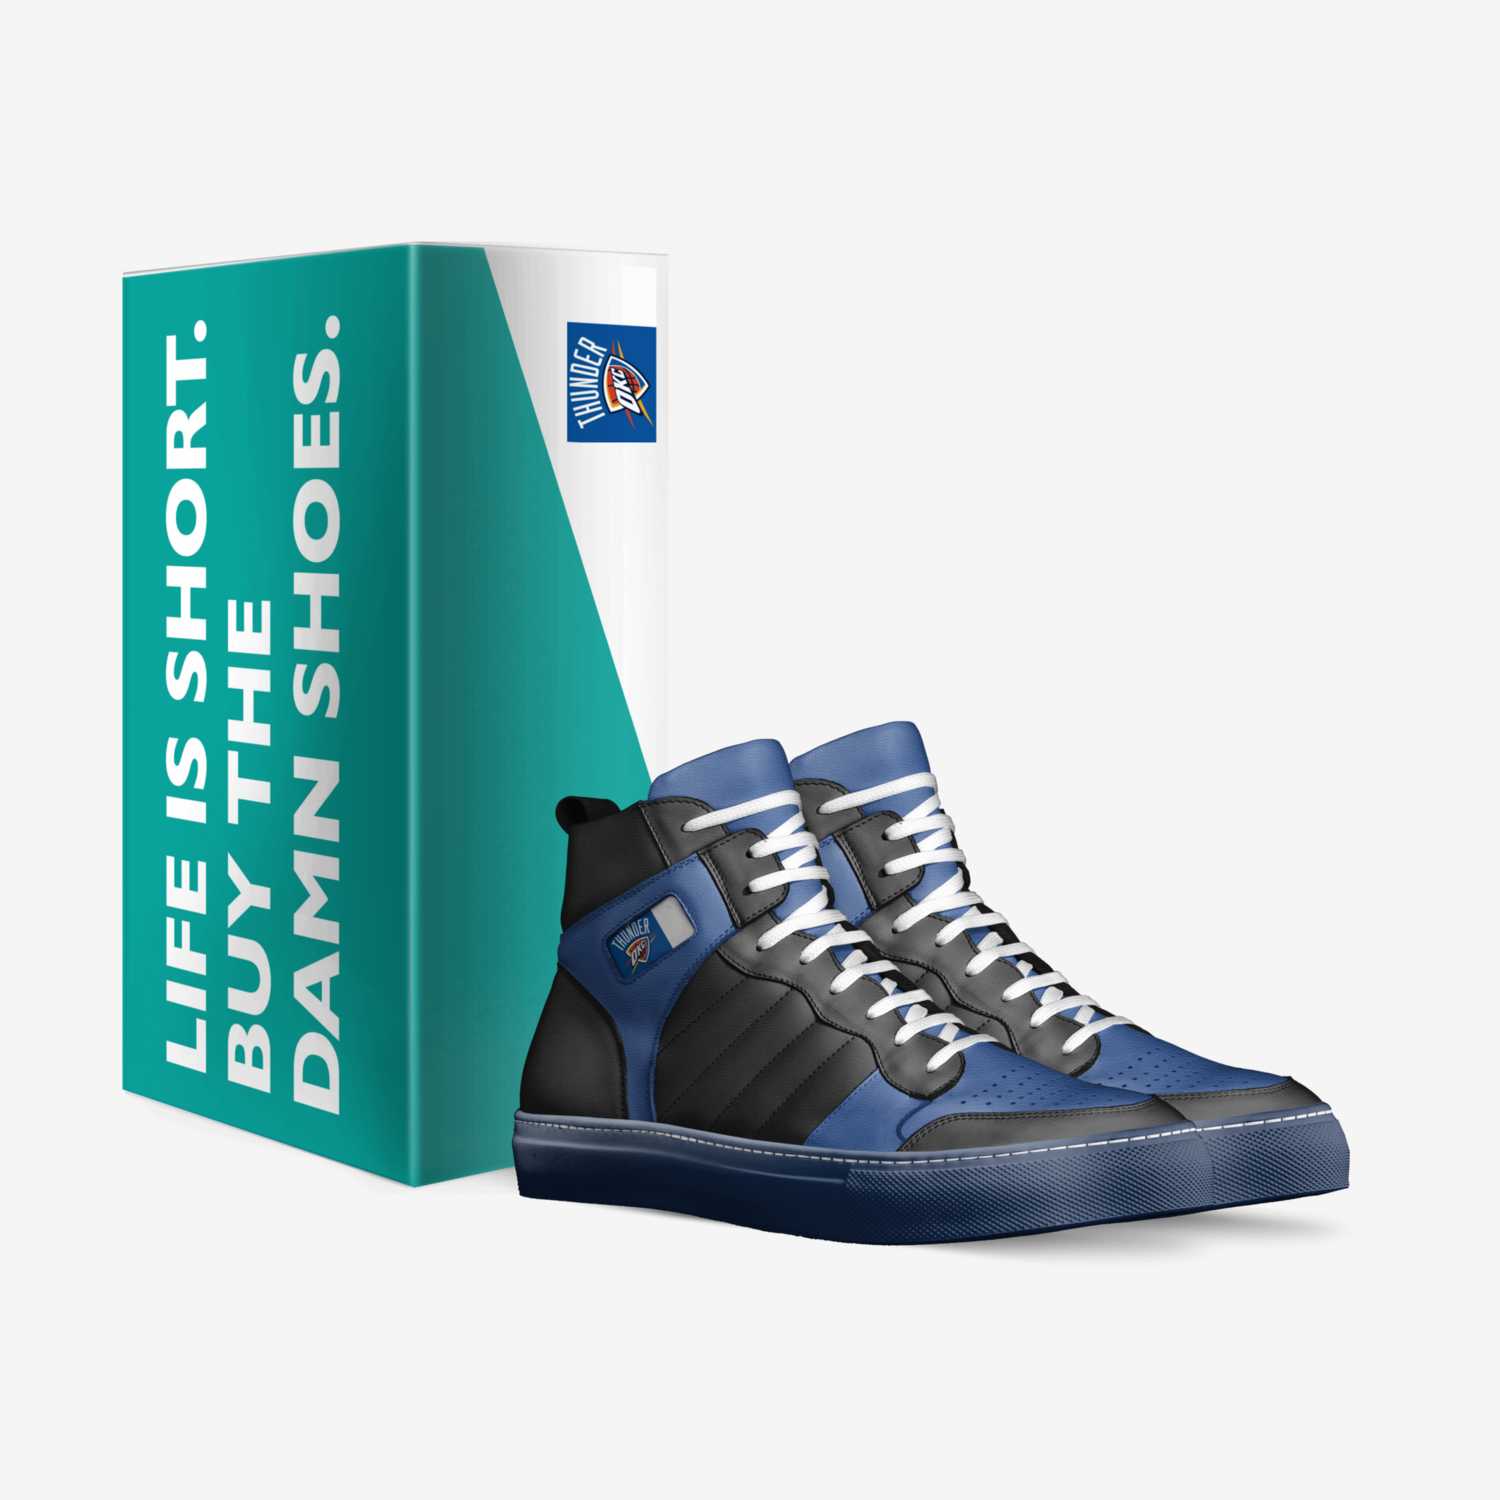 nba custom made in Italy shoes by Jurosadi Reid | Box view